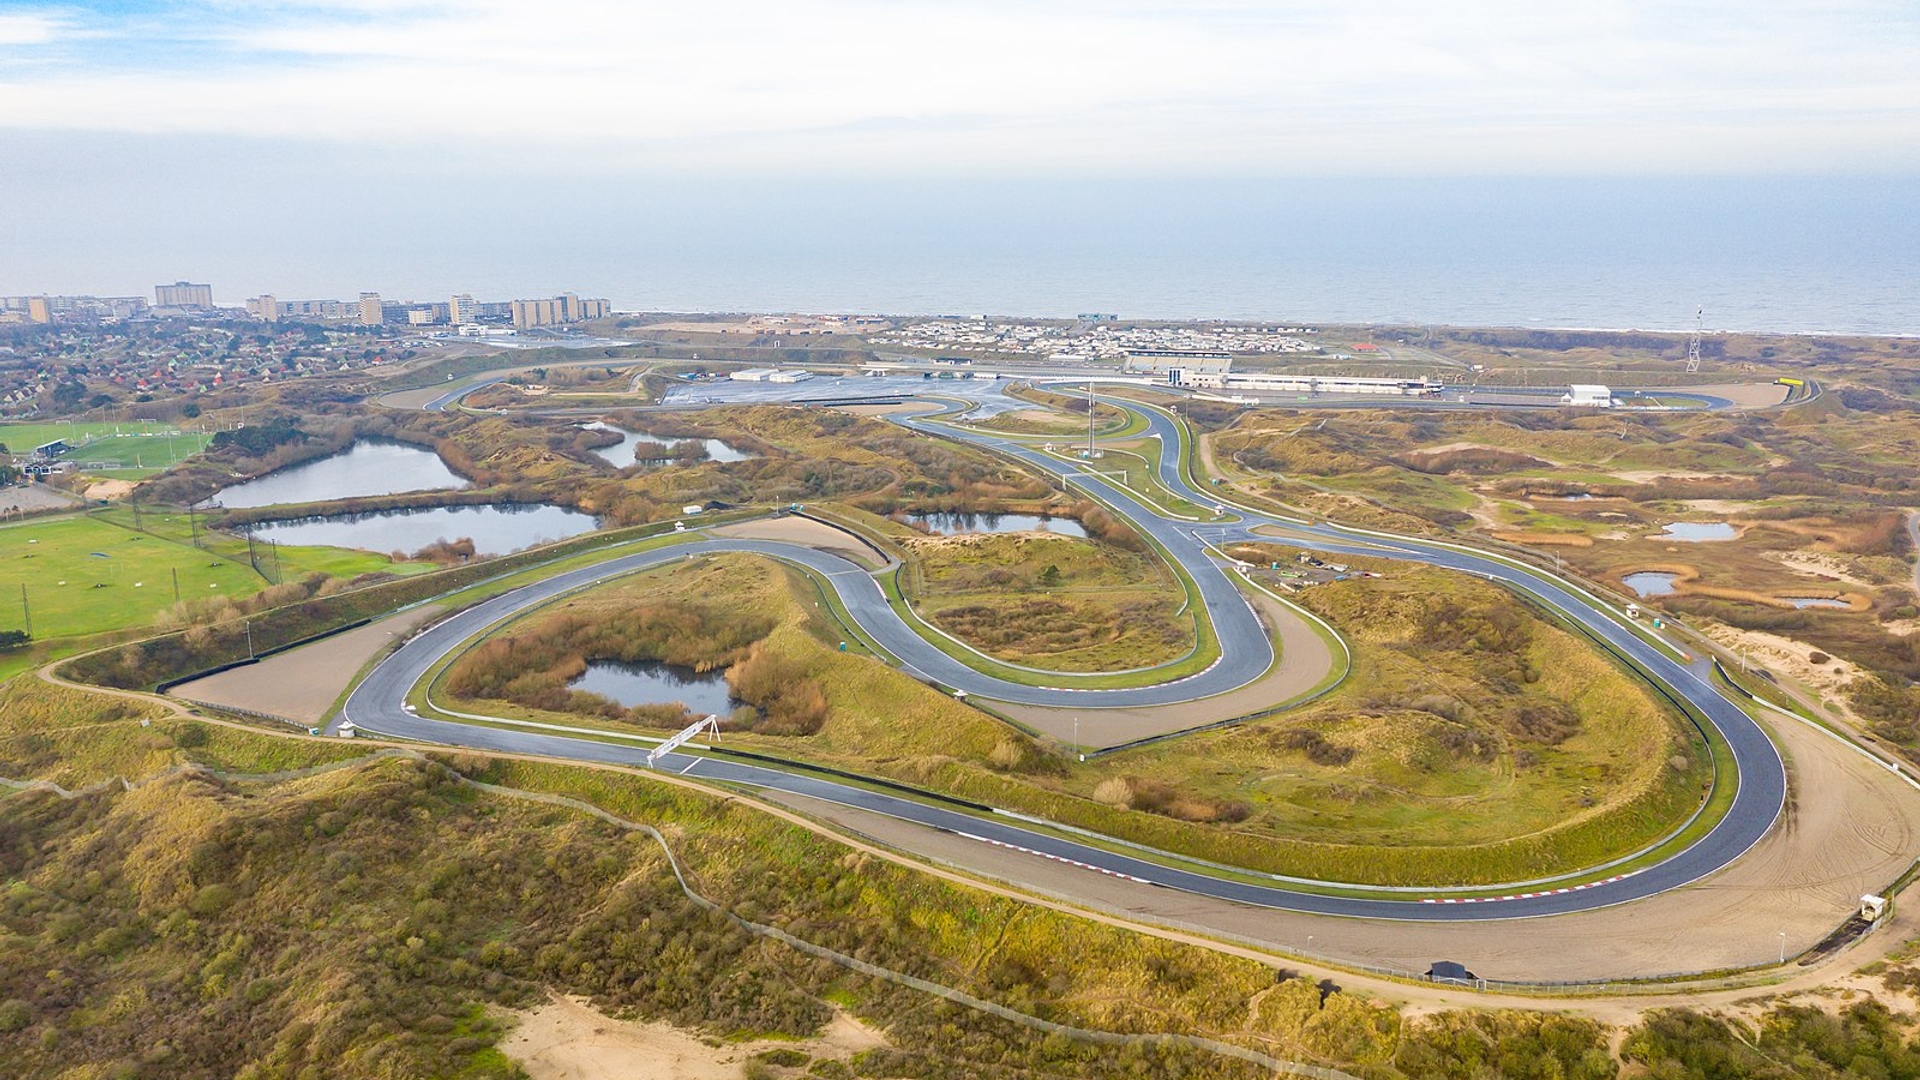 1600px-Circuit_Zandvoort_motorsport_race_track_in_the_Netherlands_(46940292845)